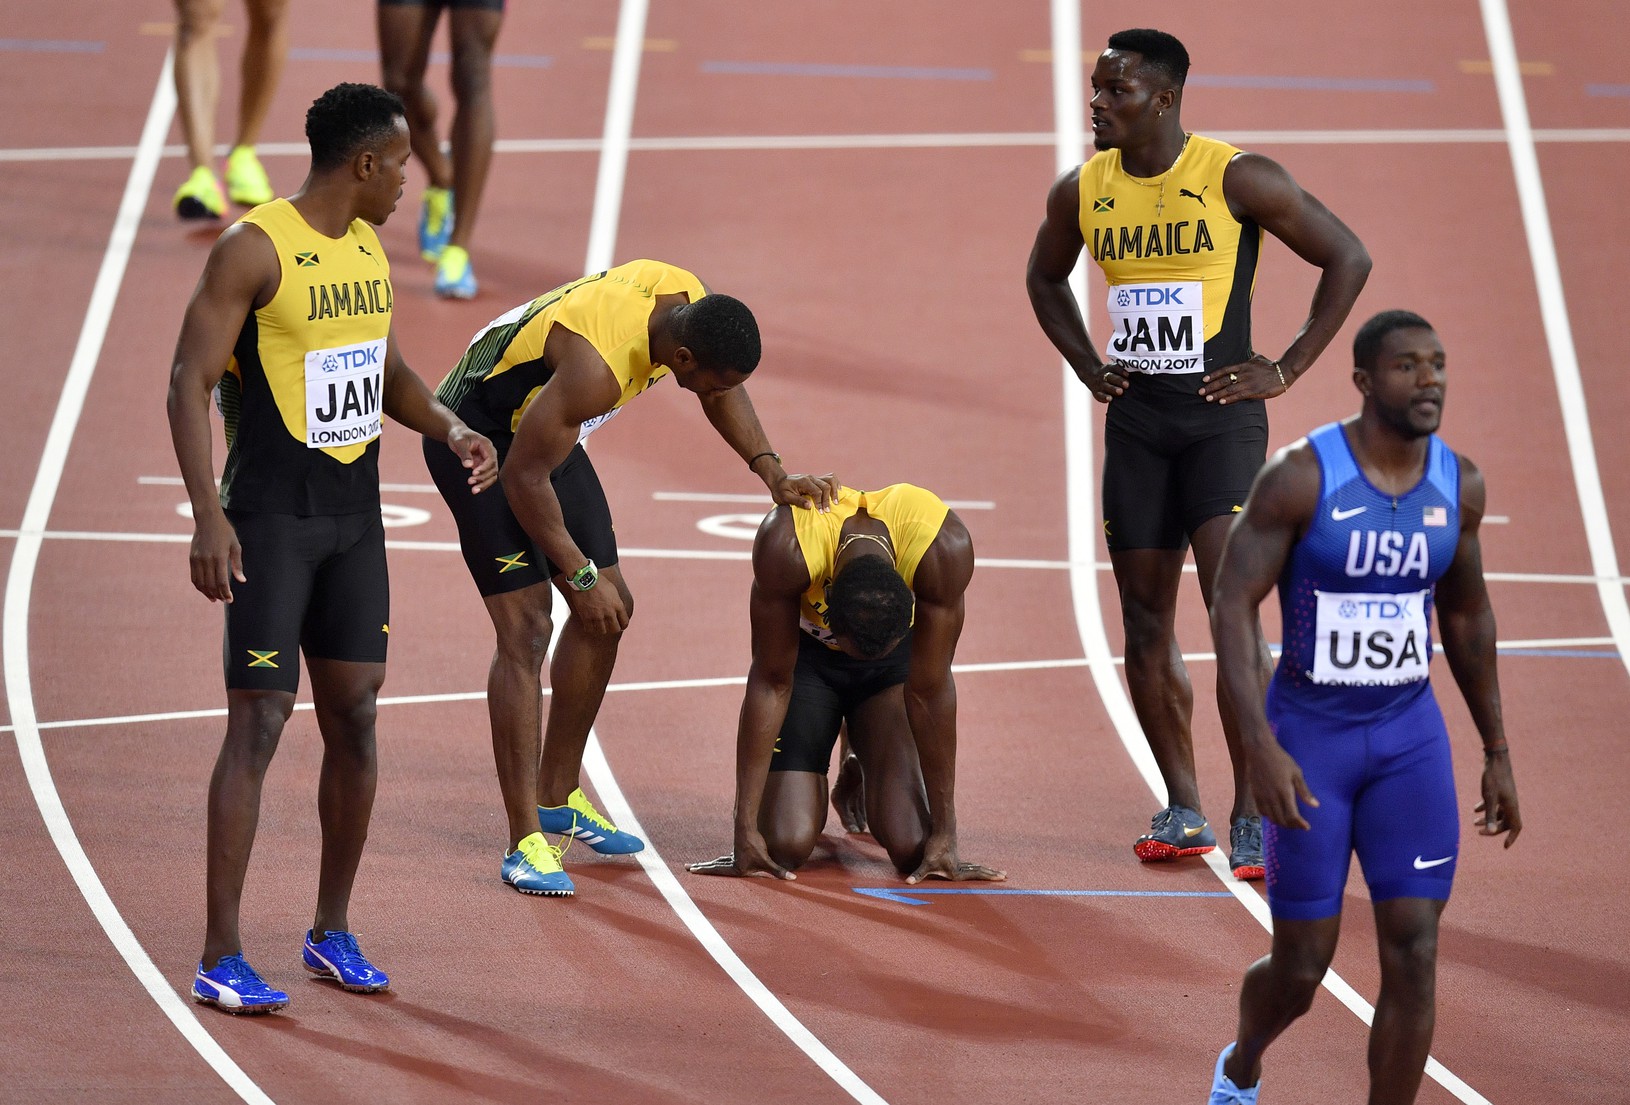 Zranený Usain Bolt